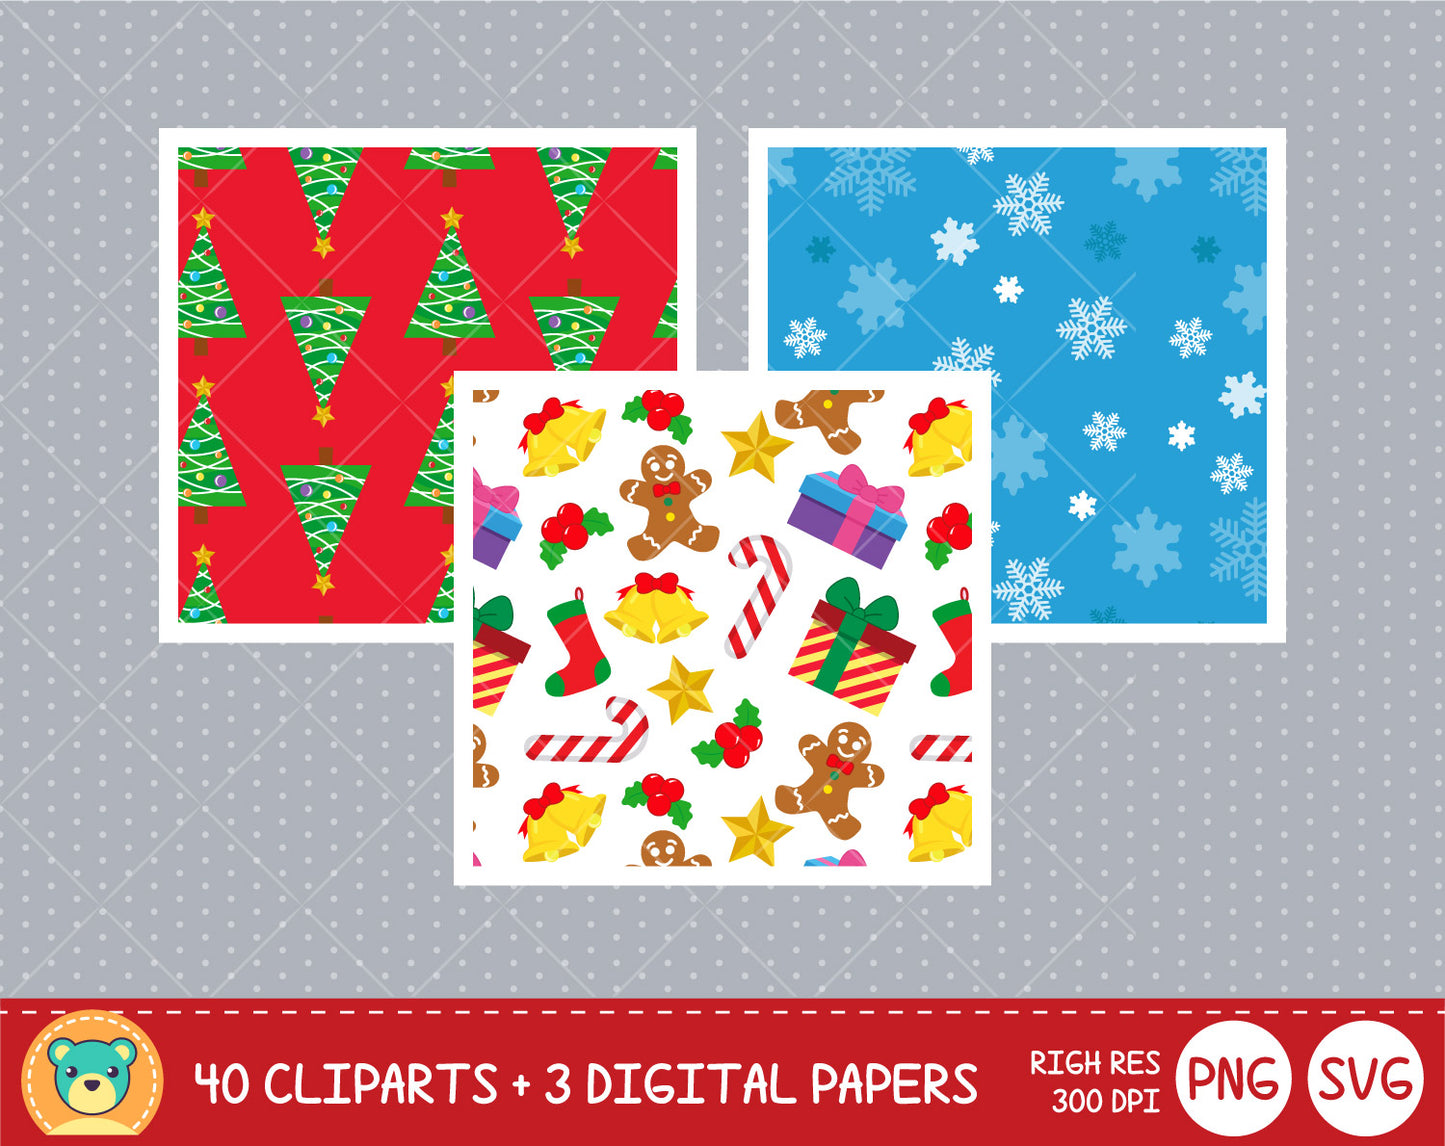 Cute Christmas clipart set, Digital clip art for decoration, scrapbooking, PNG, SVG, instant download